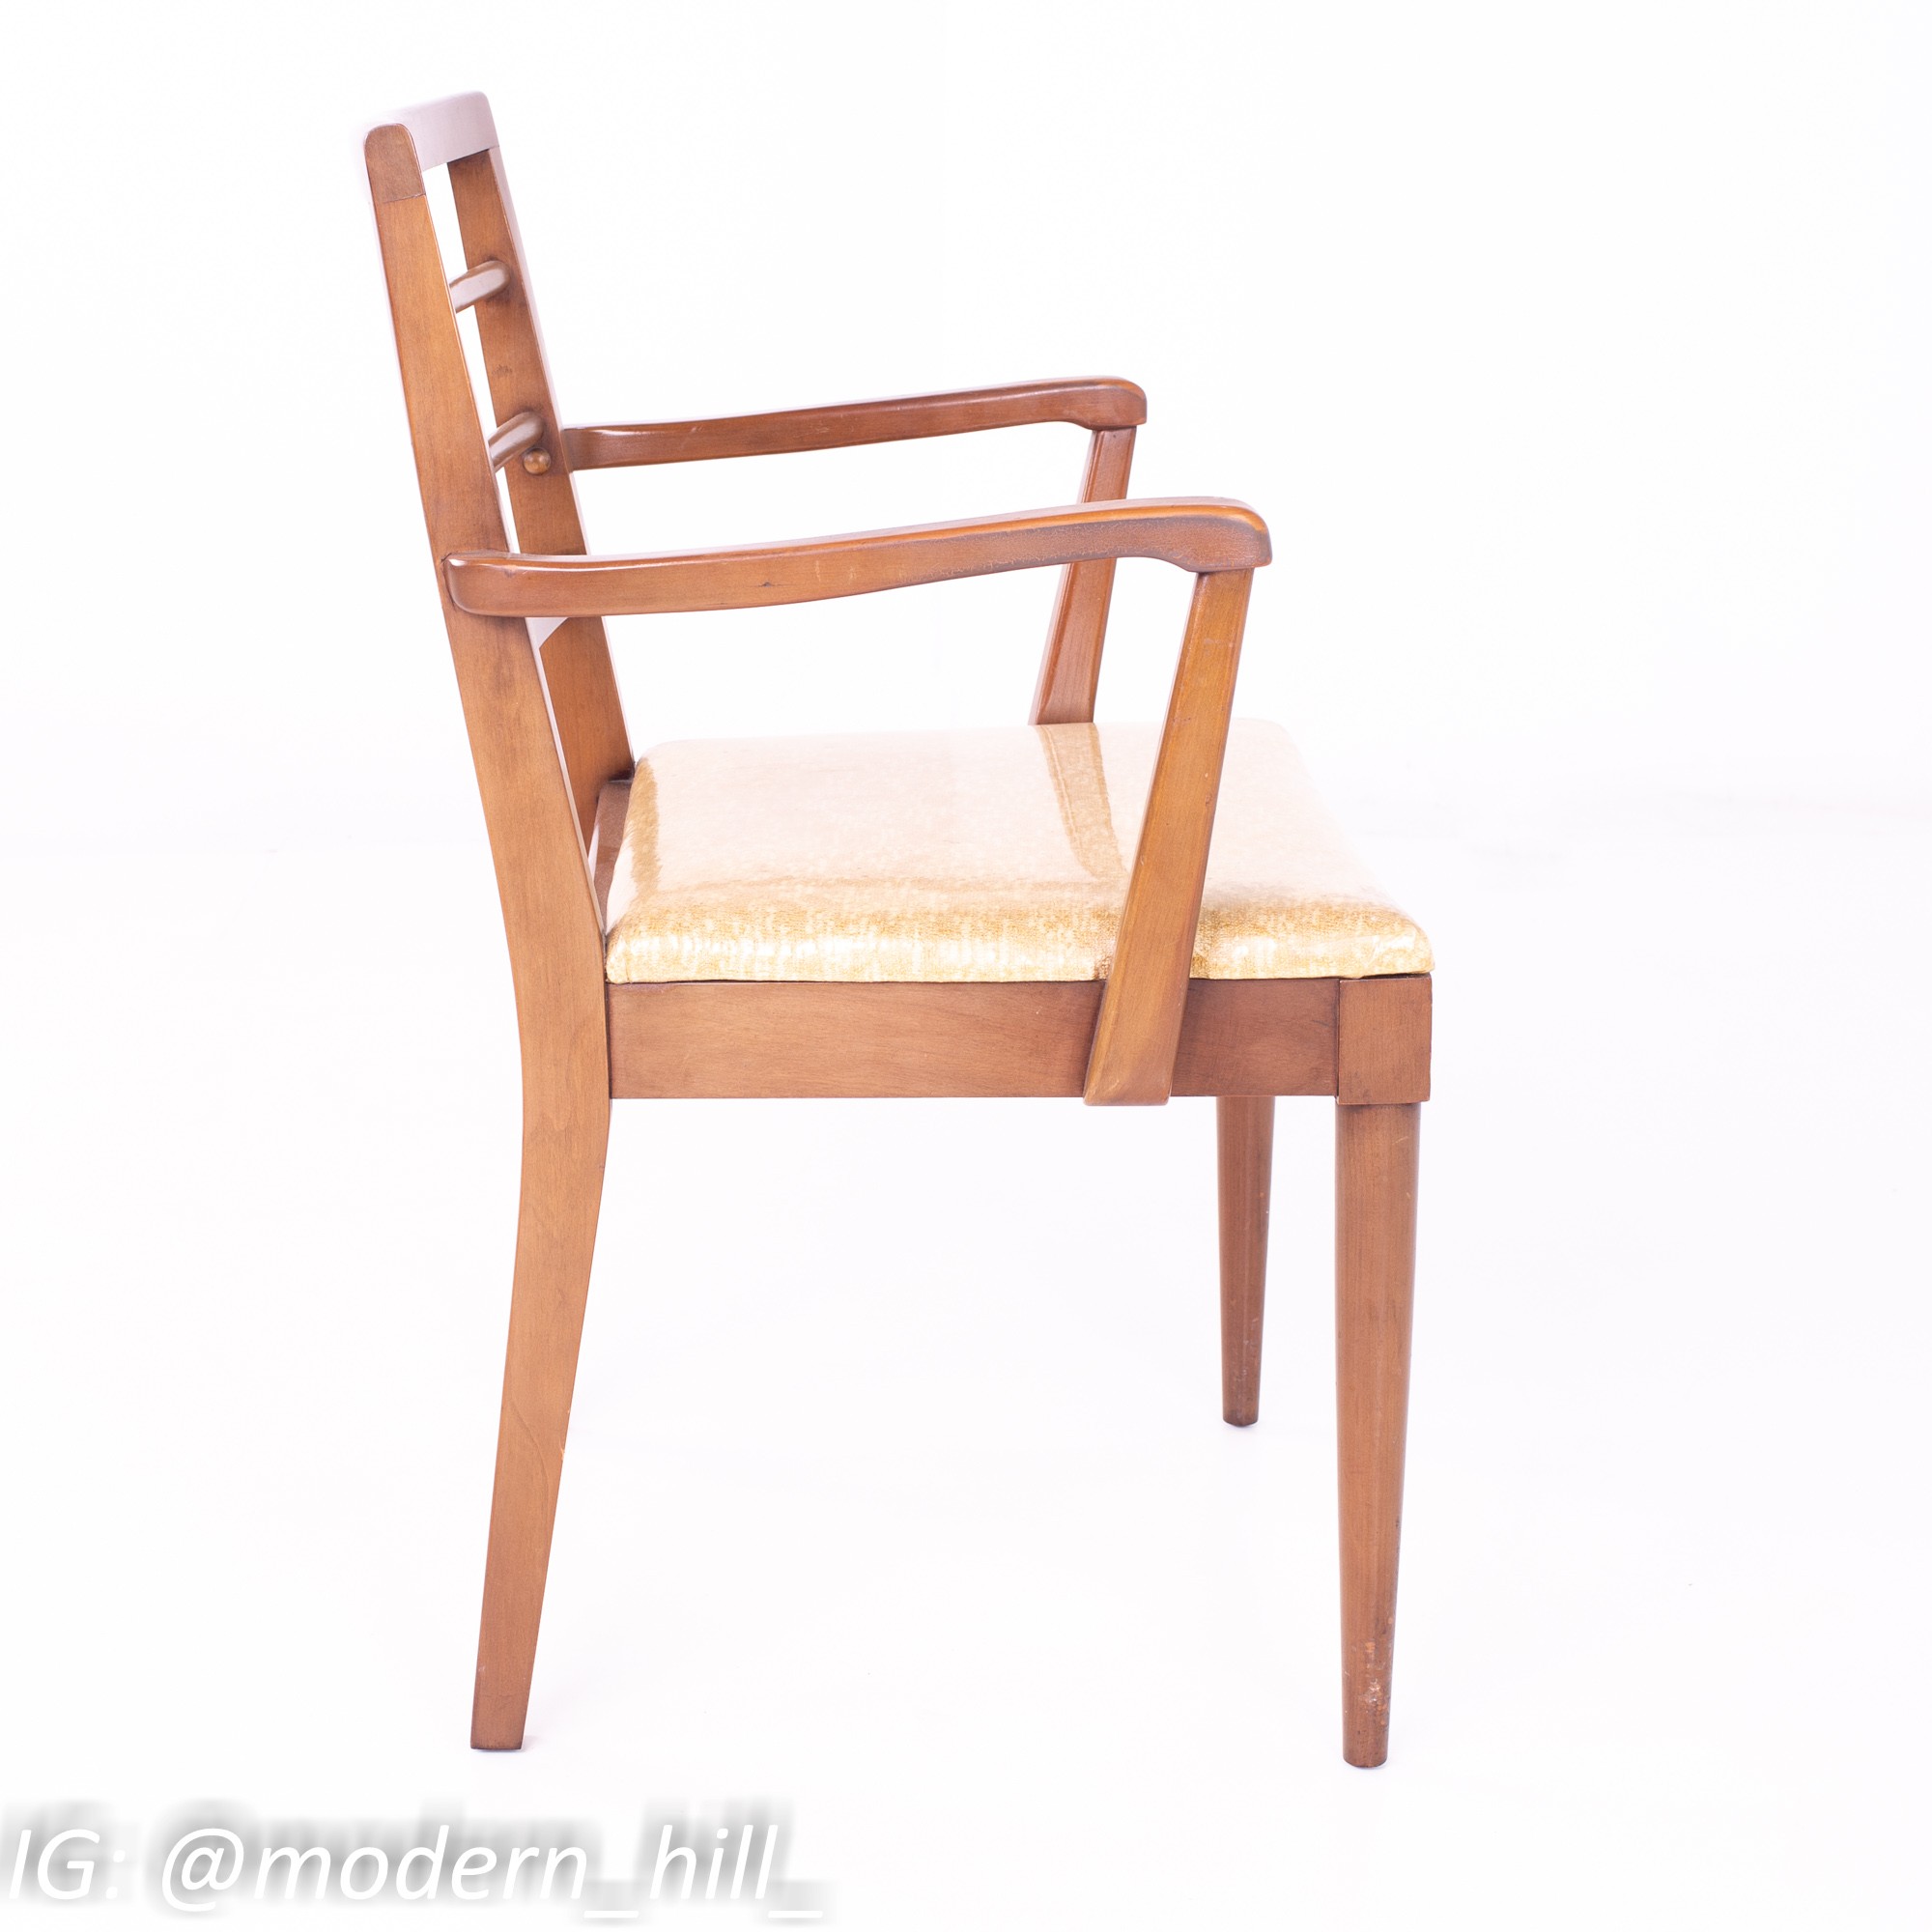 Morganton Mid Century Ladderback Cherry Dining Chairs - Pair